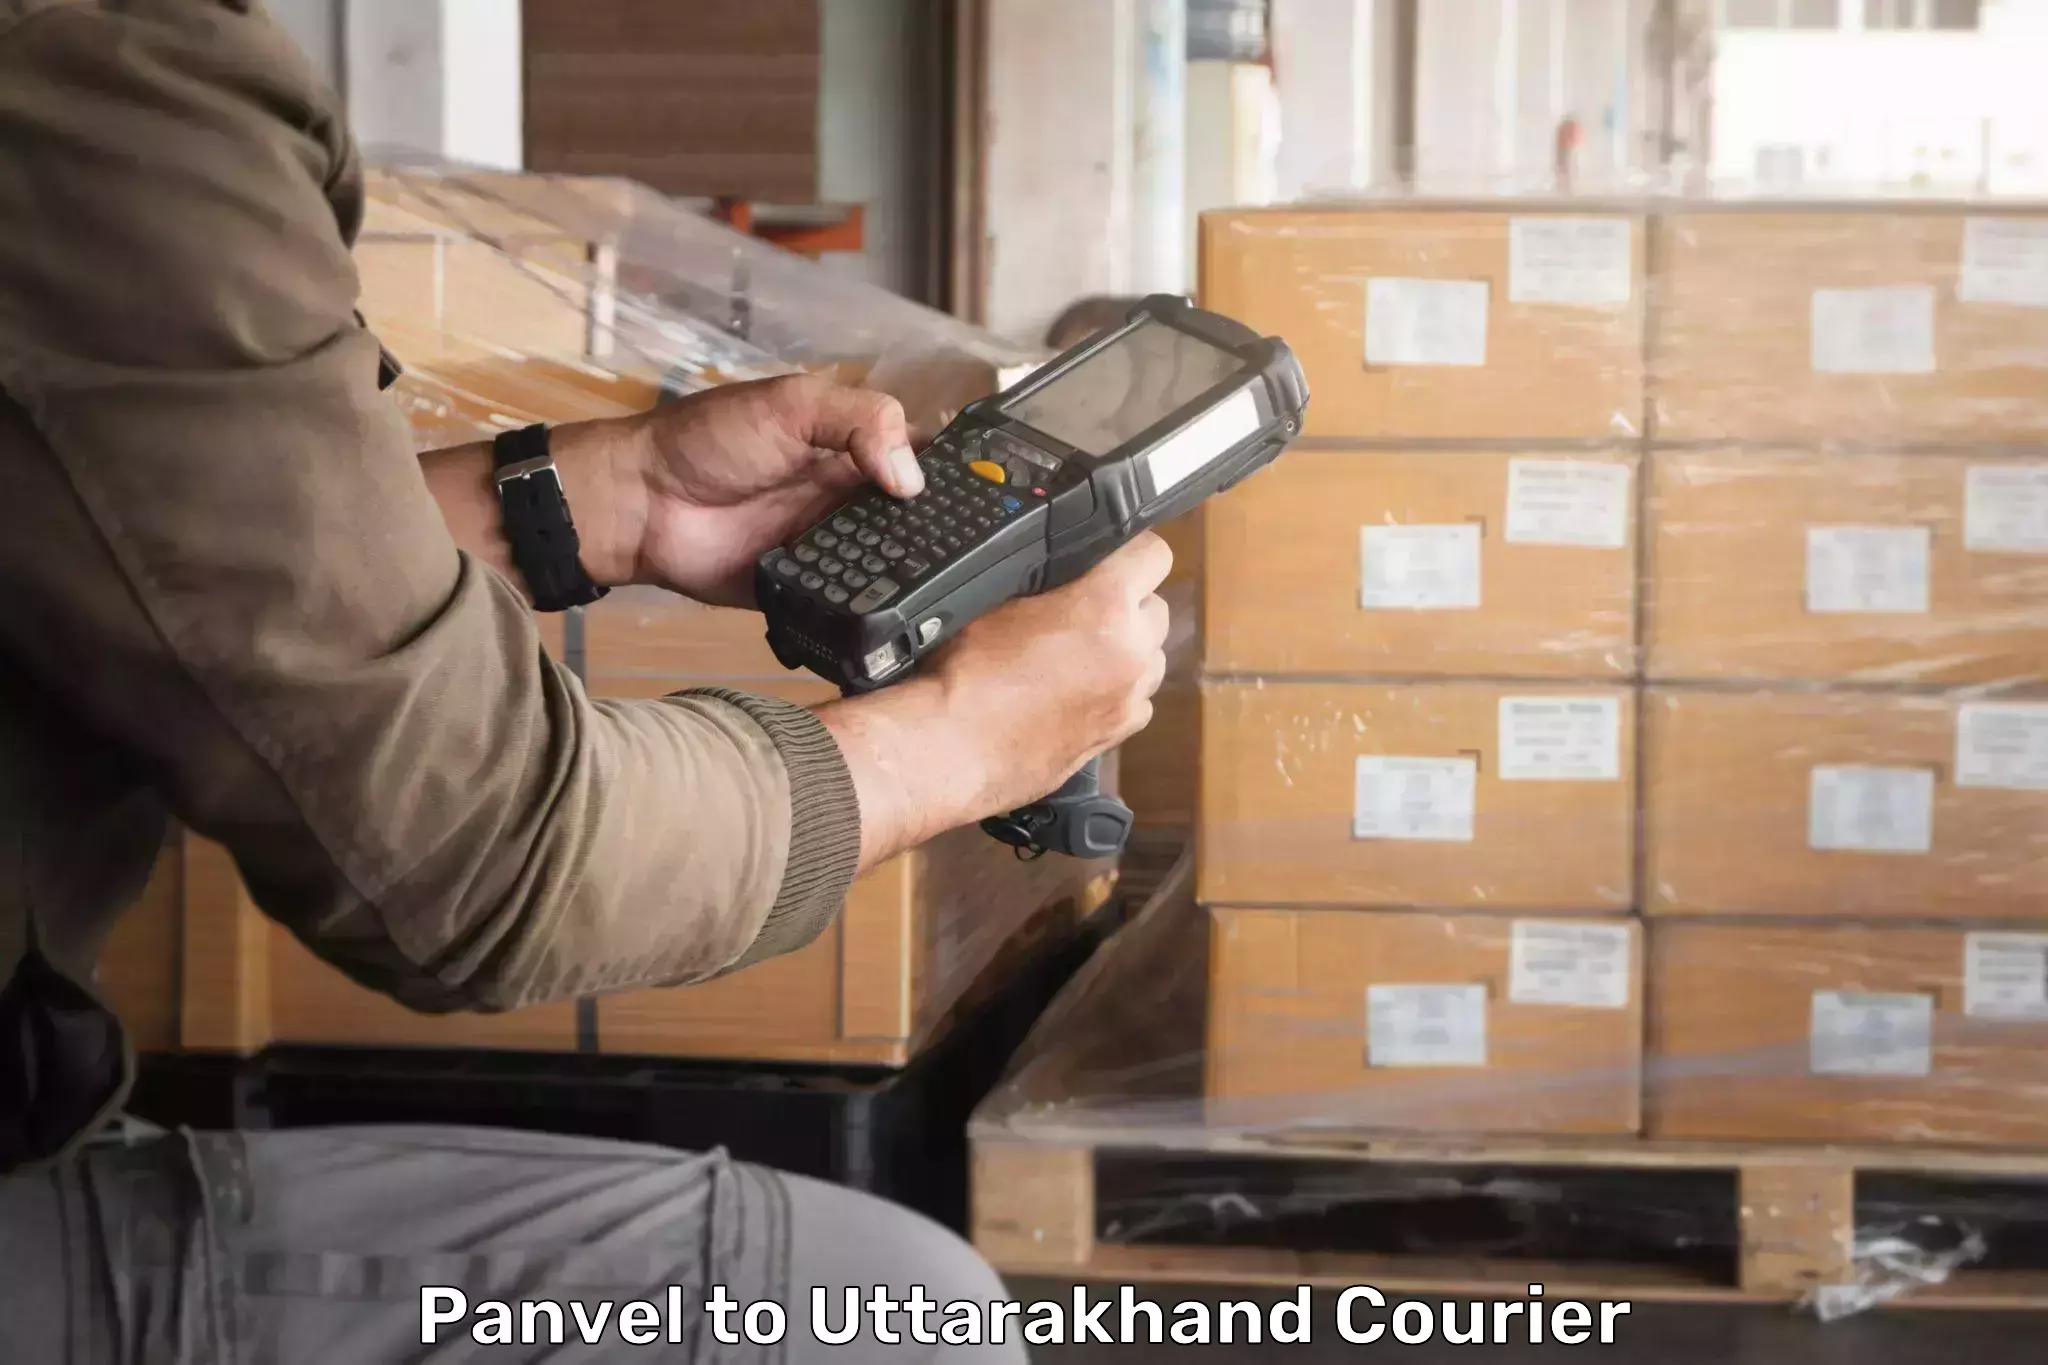 Advanced courier platforms Panvel to IIT Roorkee